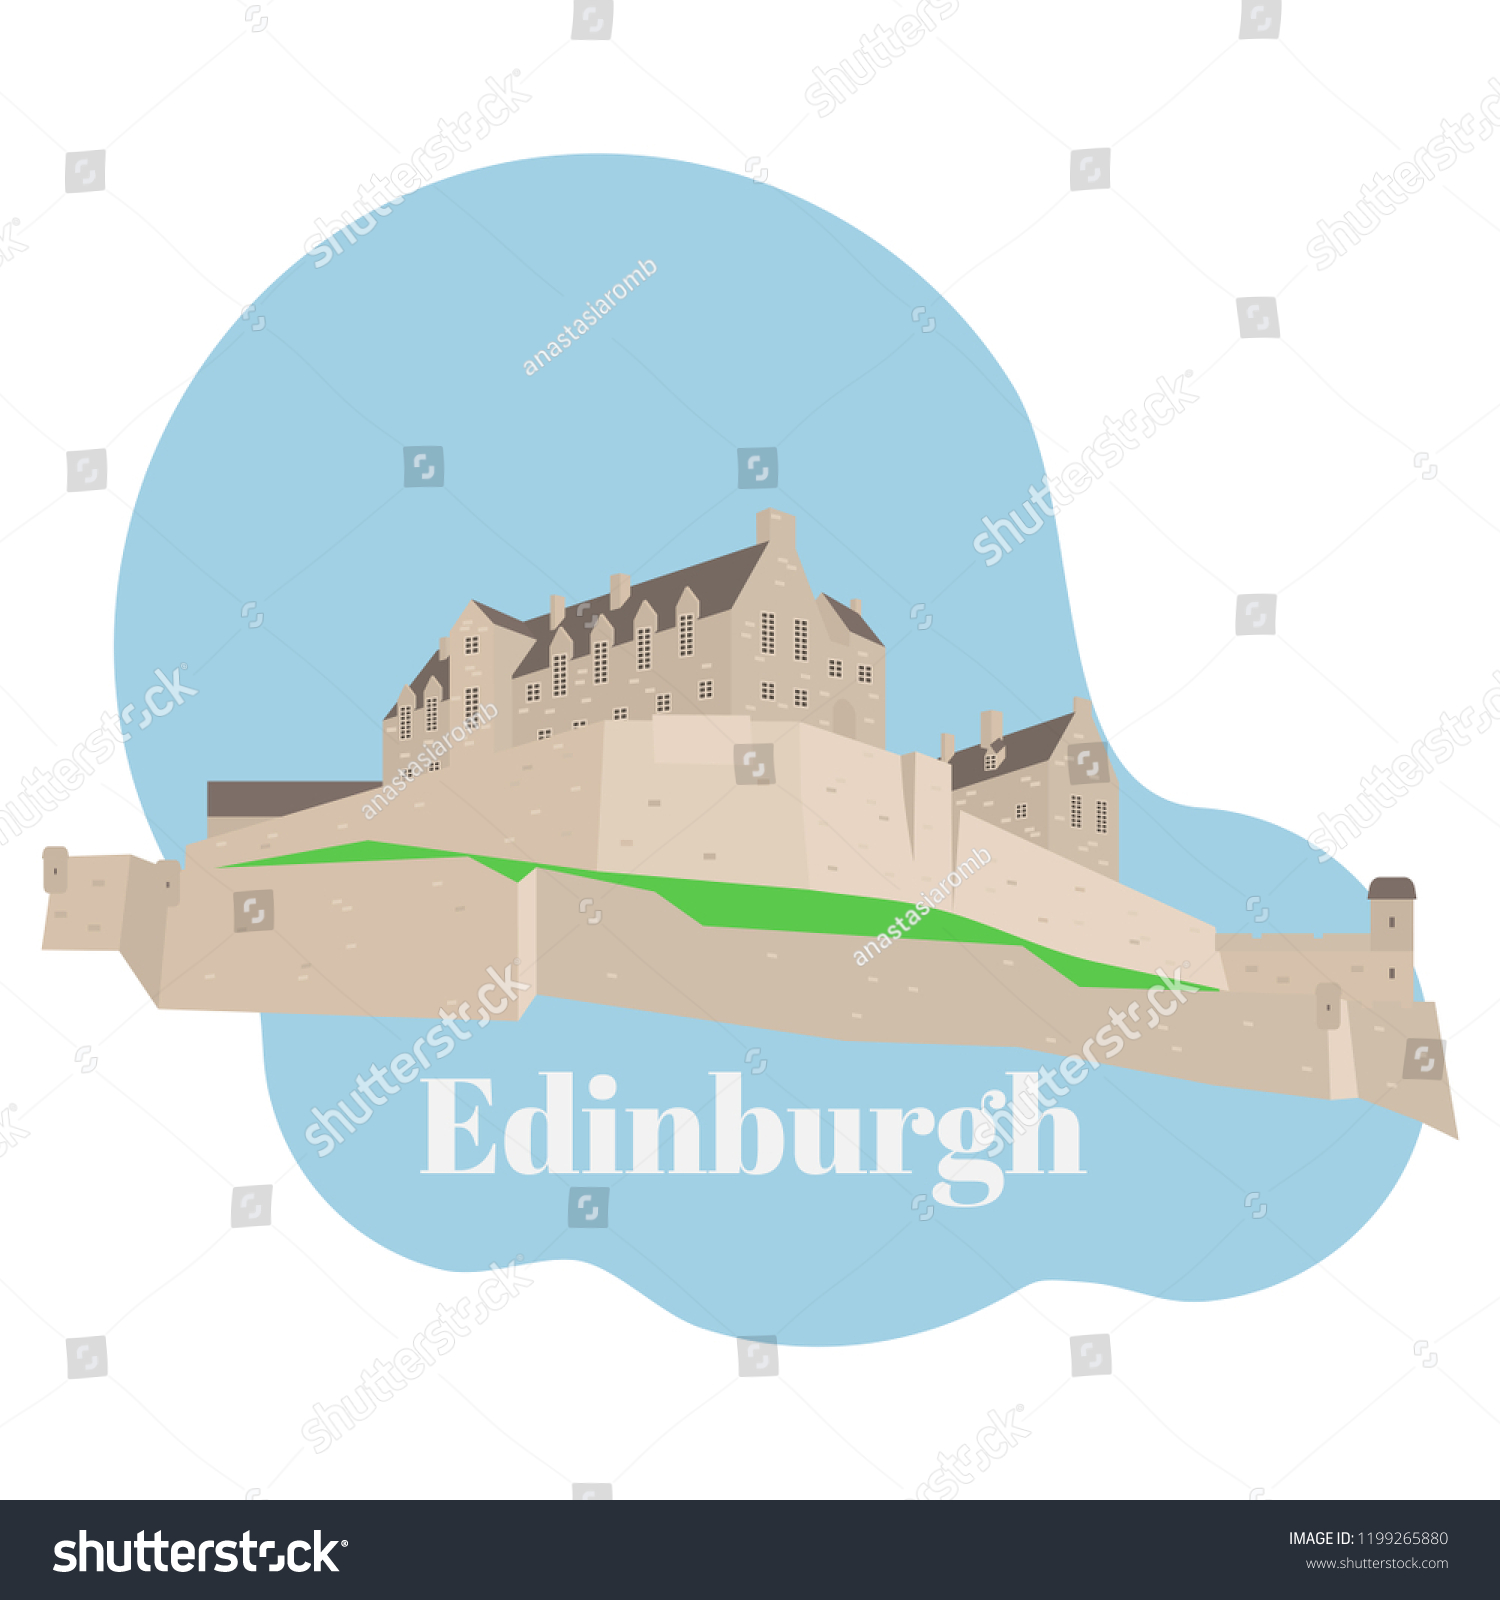 SVG of Flat building of Edinburgh Castle in Scotland, United Kingdom. Historic sight attraction sightseeing. Travel icon landmark. City architecture of Great Britain vector illustration svg